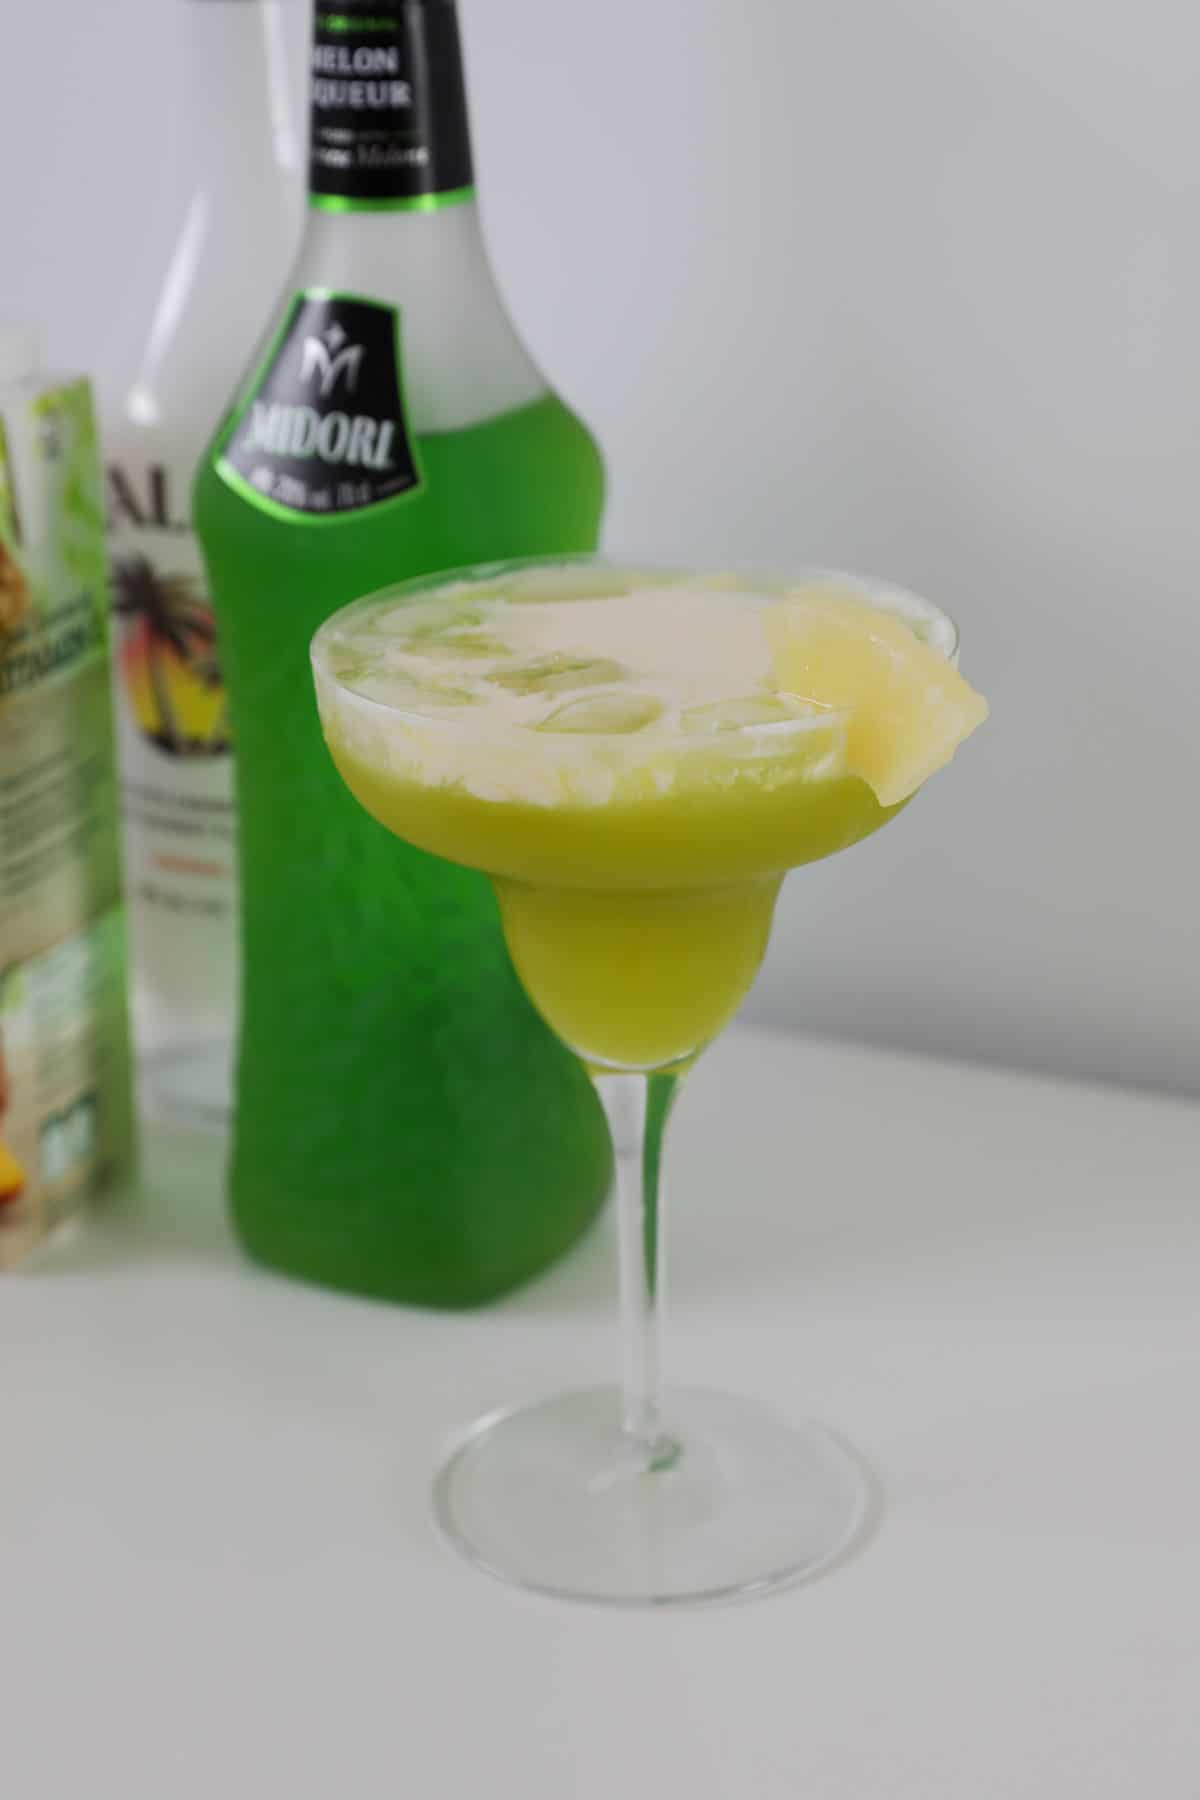 A midori splicein a cocktail glass with pineapple garnish.